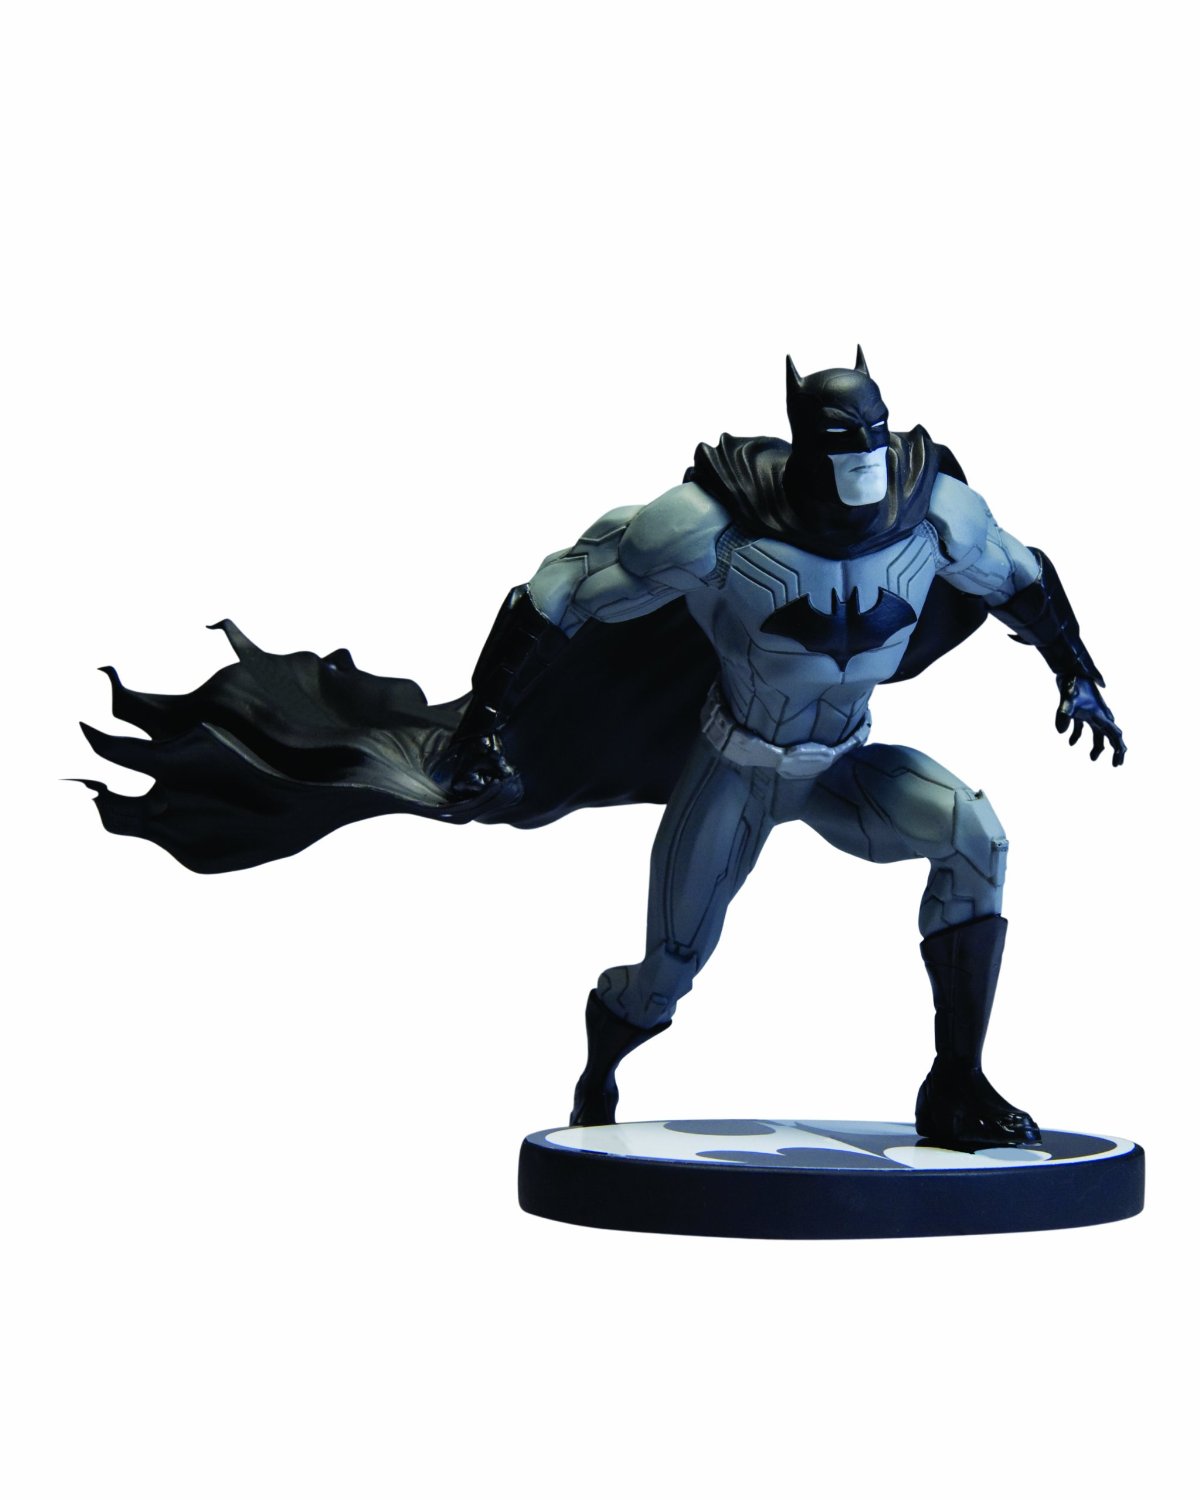 Black & White The New 52 Batman Statue by Jim Lee